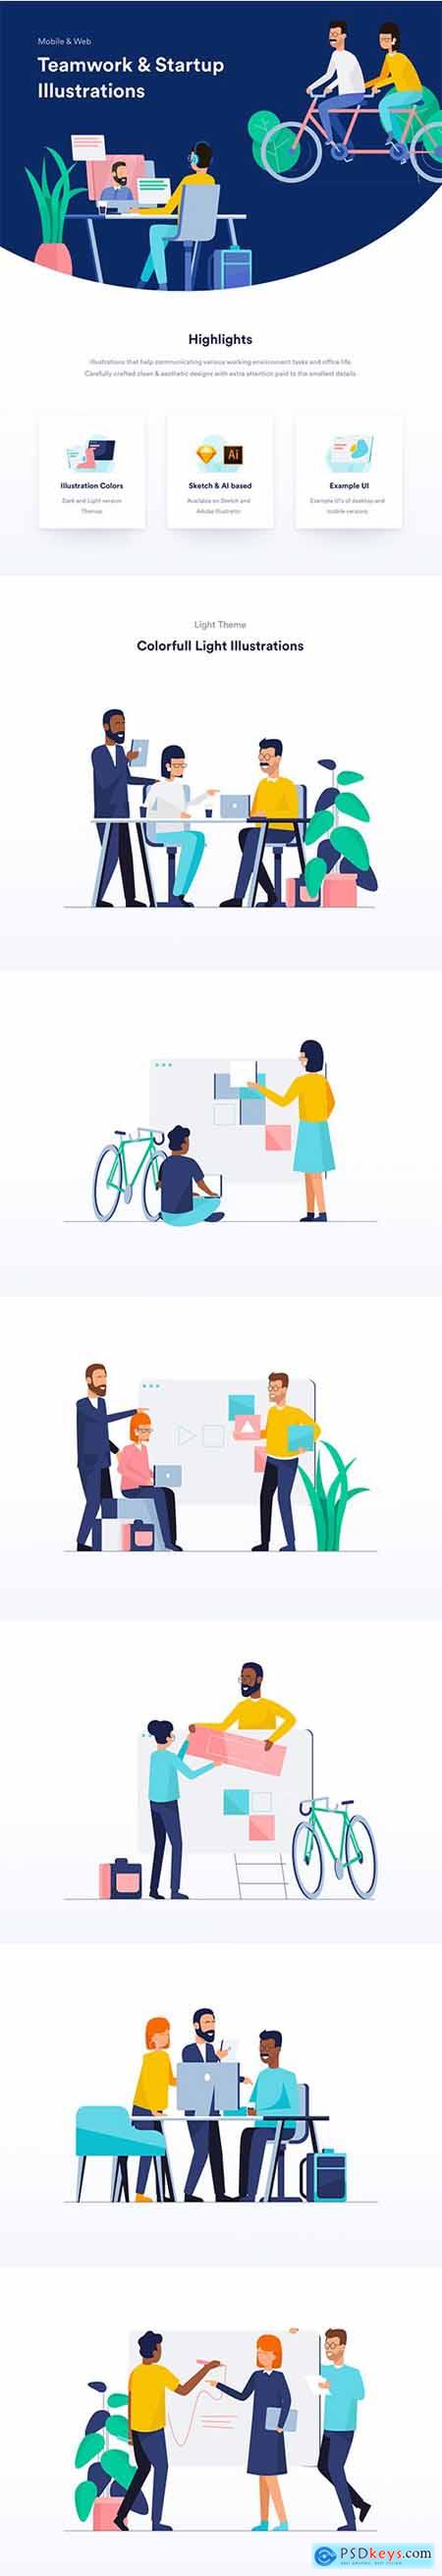 Teamwork & Startup Illustrations